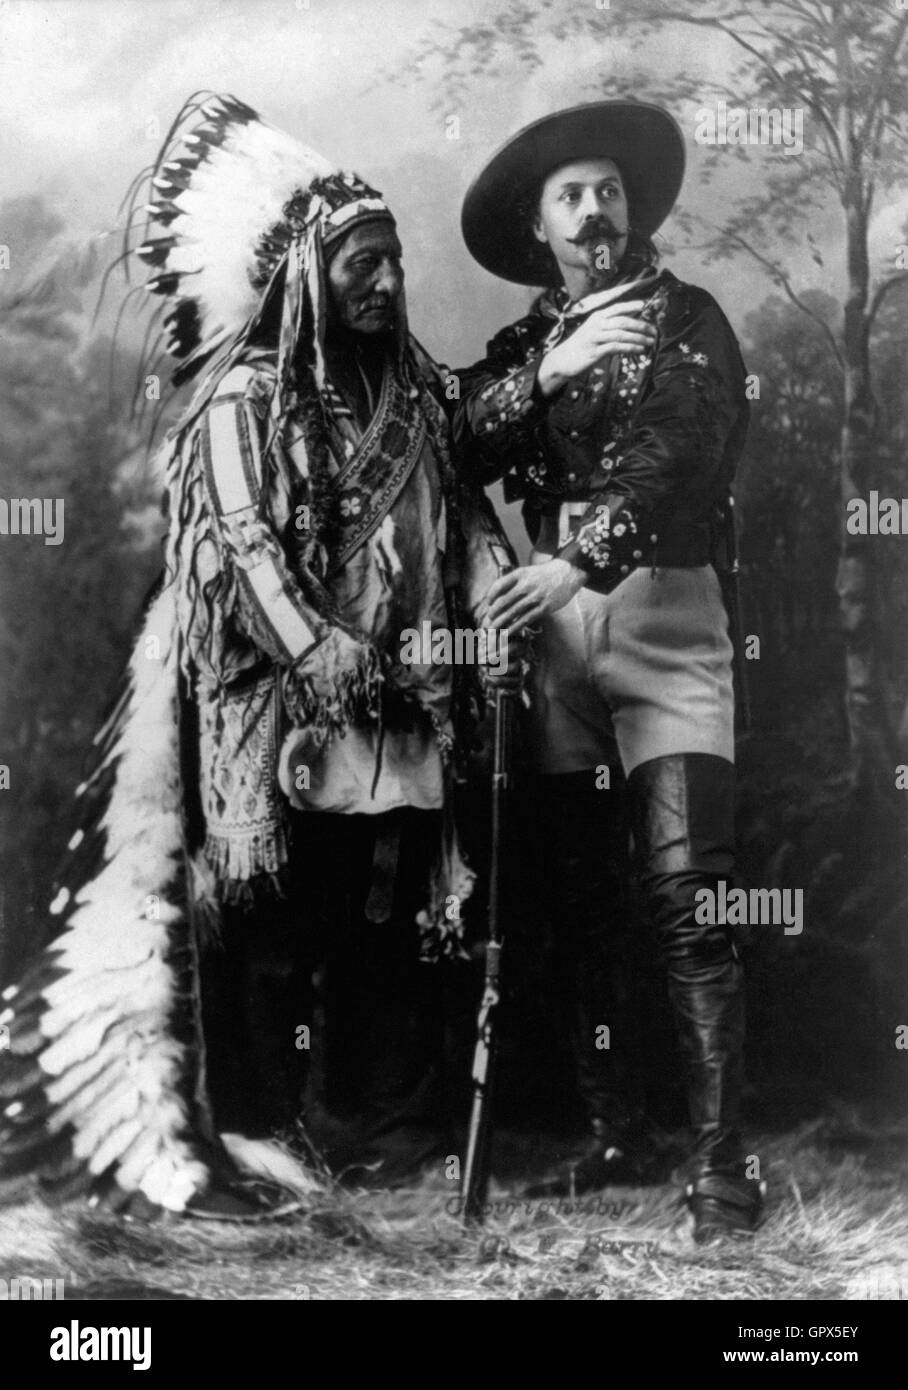 William Notman studios - Sitting Bull and Buffalo Bill (1895) Photographic portrait Stock Photo